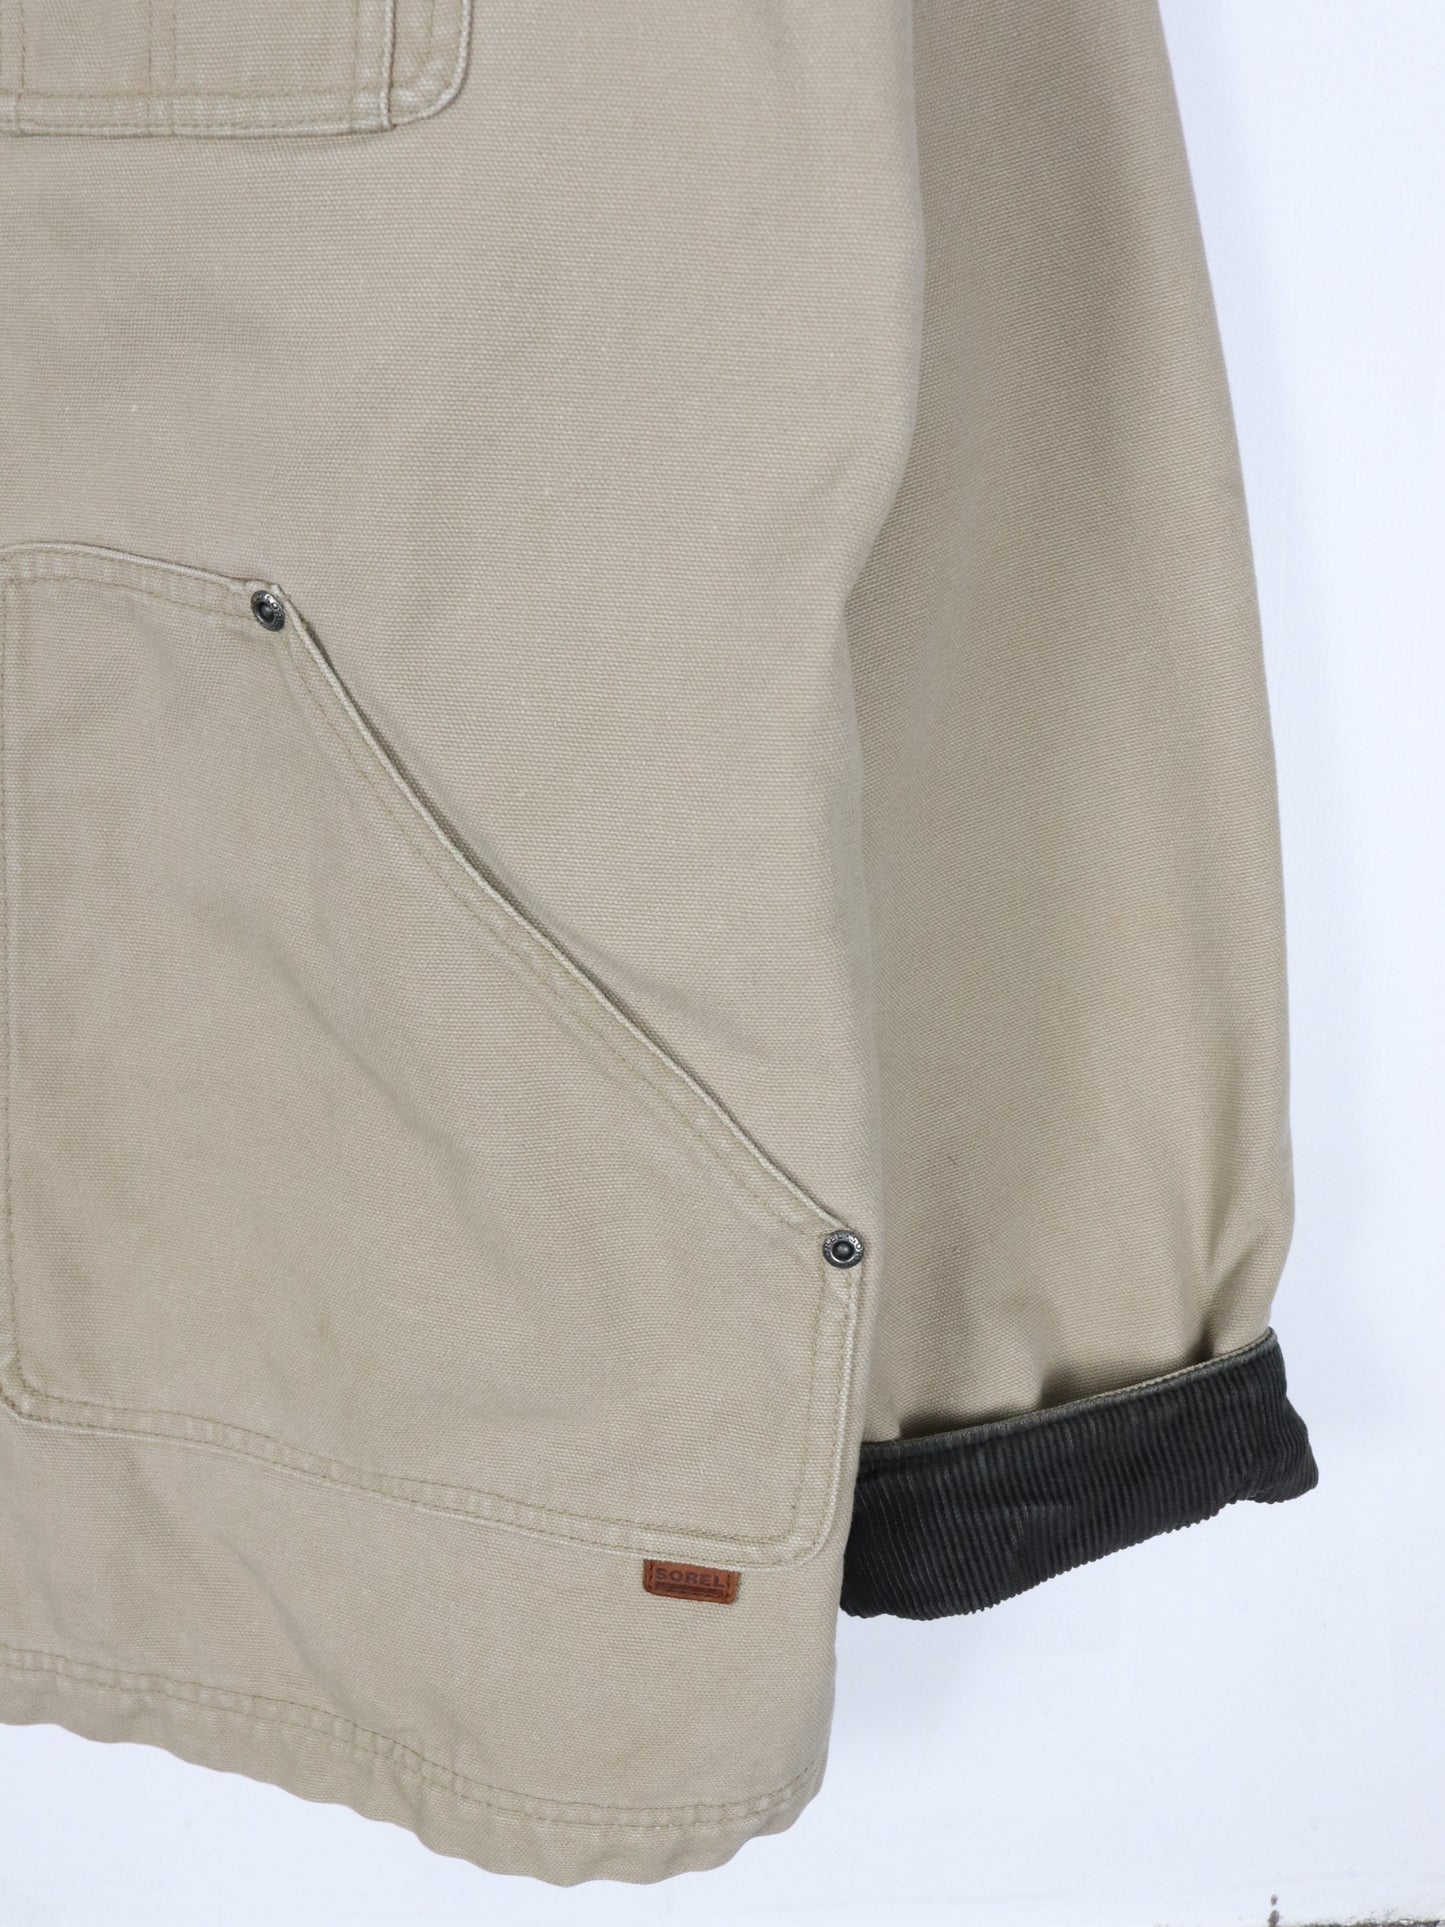 Sorel Jacket Mens XL Brown Work Wear Chore Coat